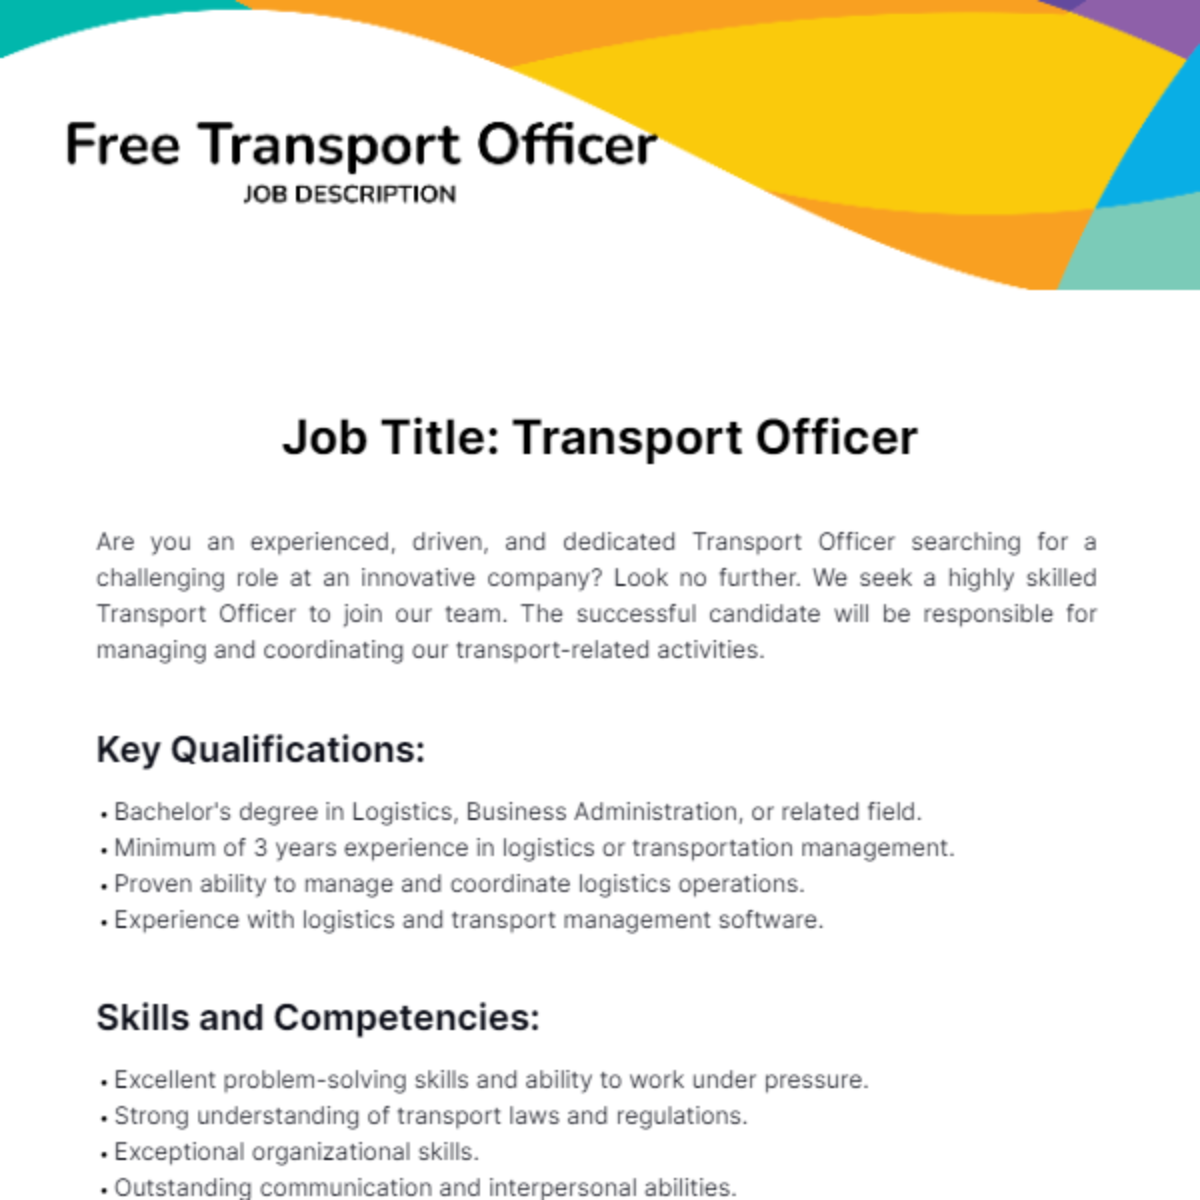 Free Transport Officer Job Description Template